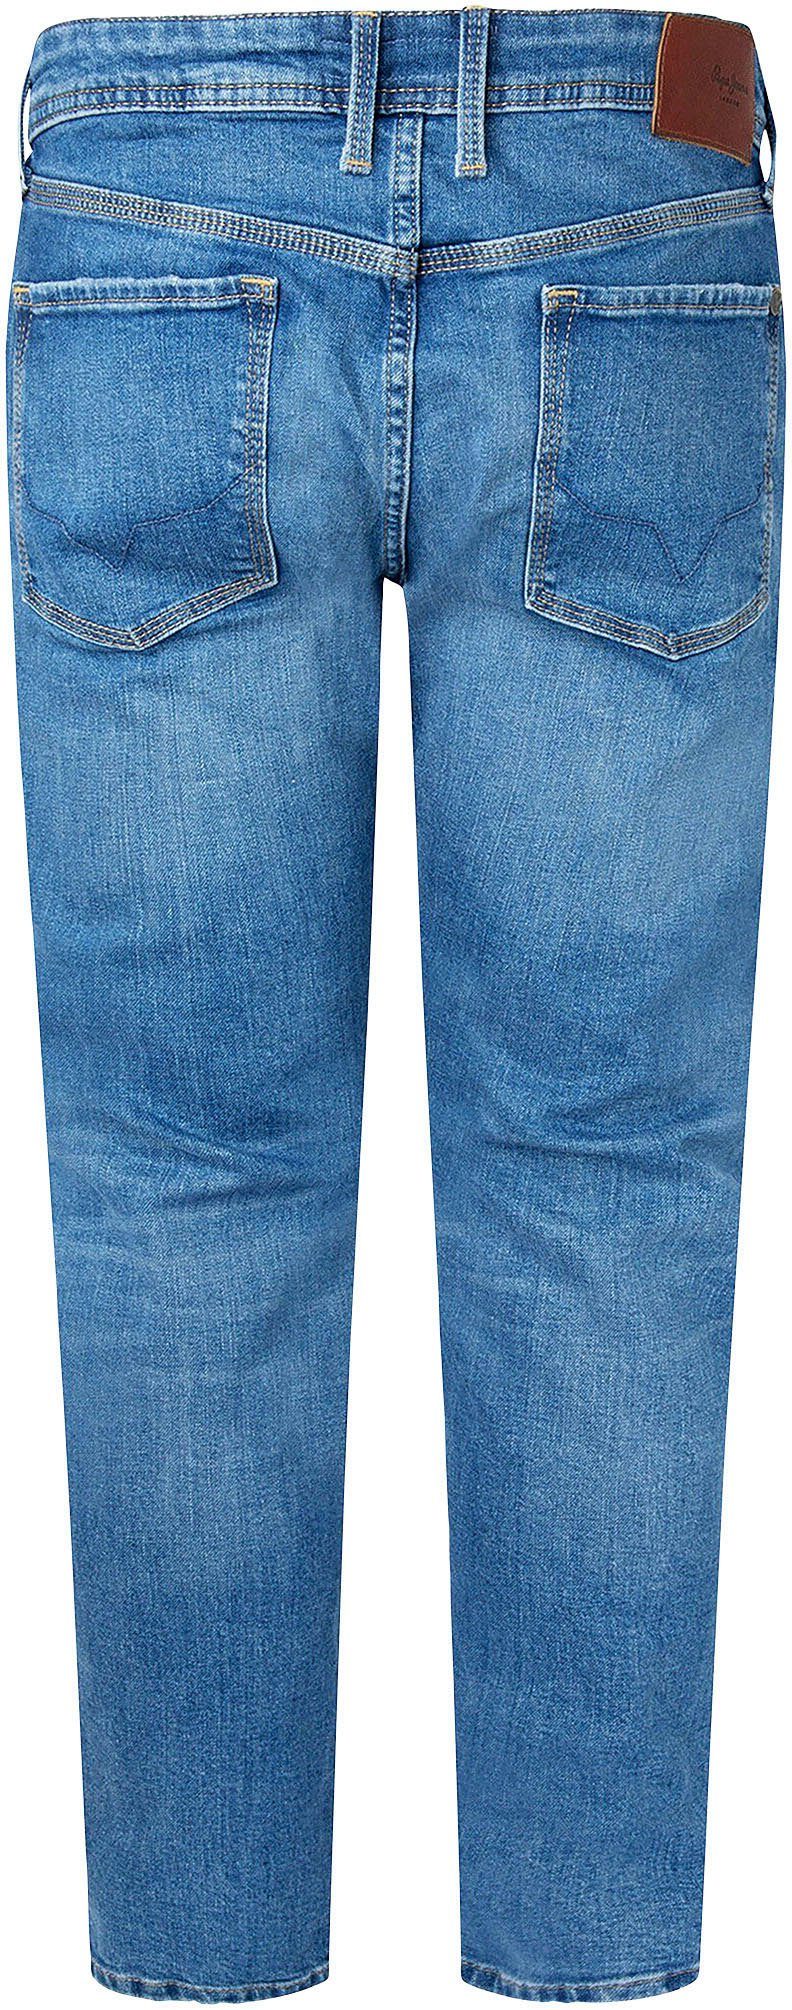 Jeans Slim-fit-Jeans used HATCH blue REGULAR Pepe